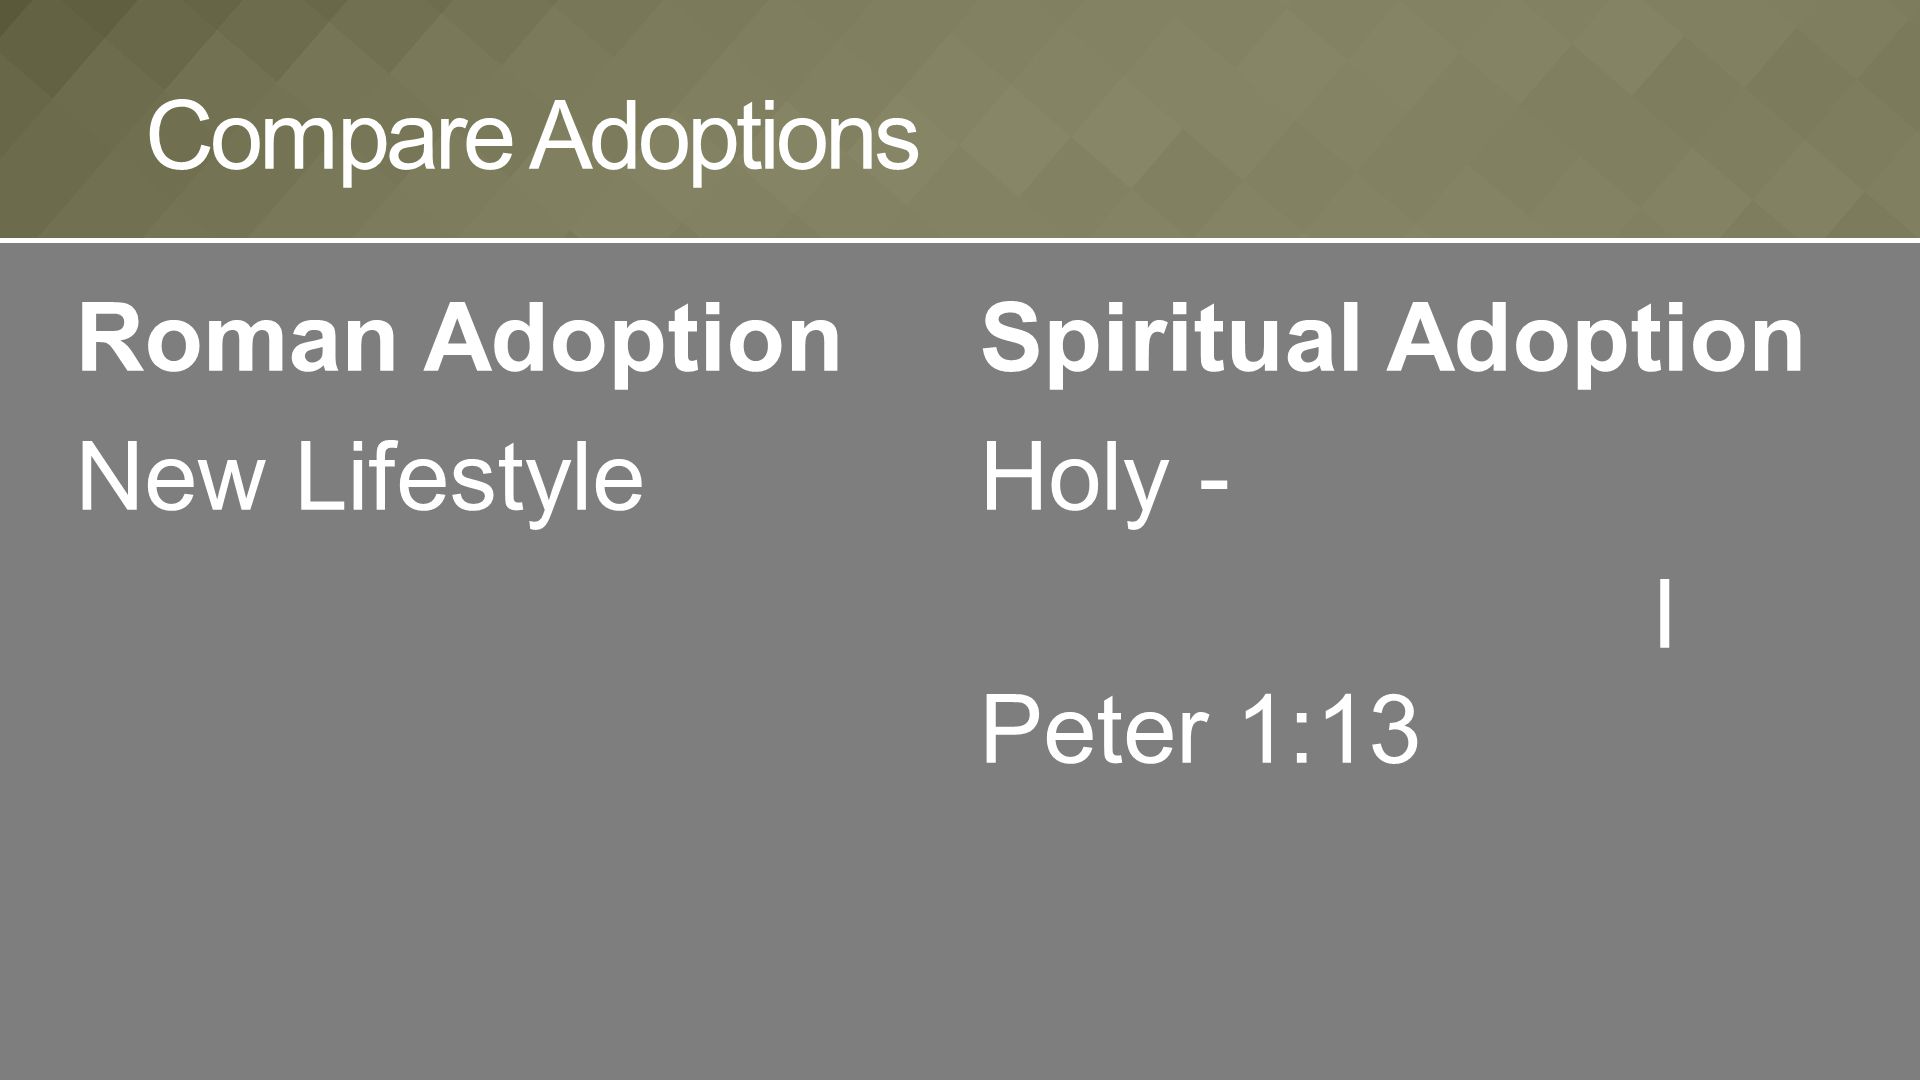 Roman Adoption New Lifestyle Compare Adoptions Spiritual Adoption Holy - I Peter 1:13